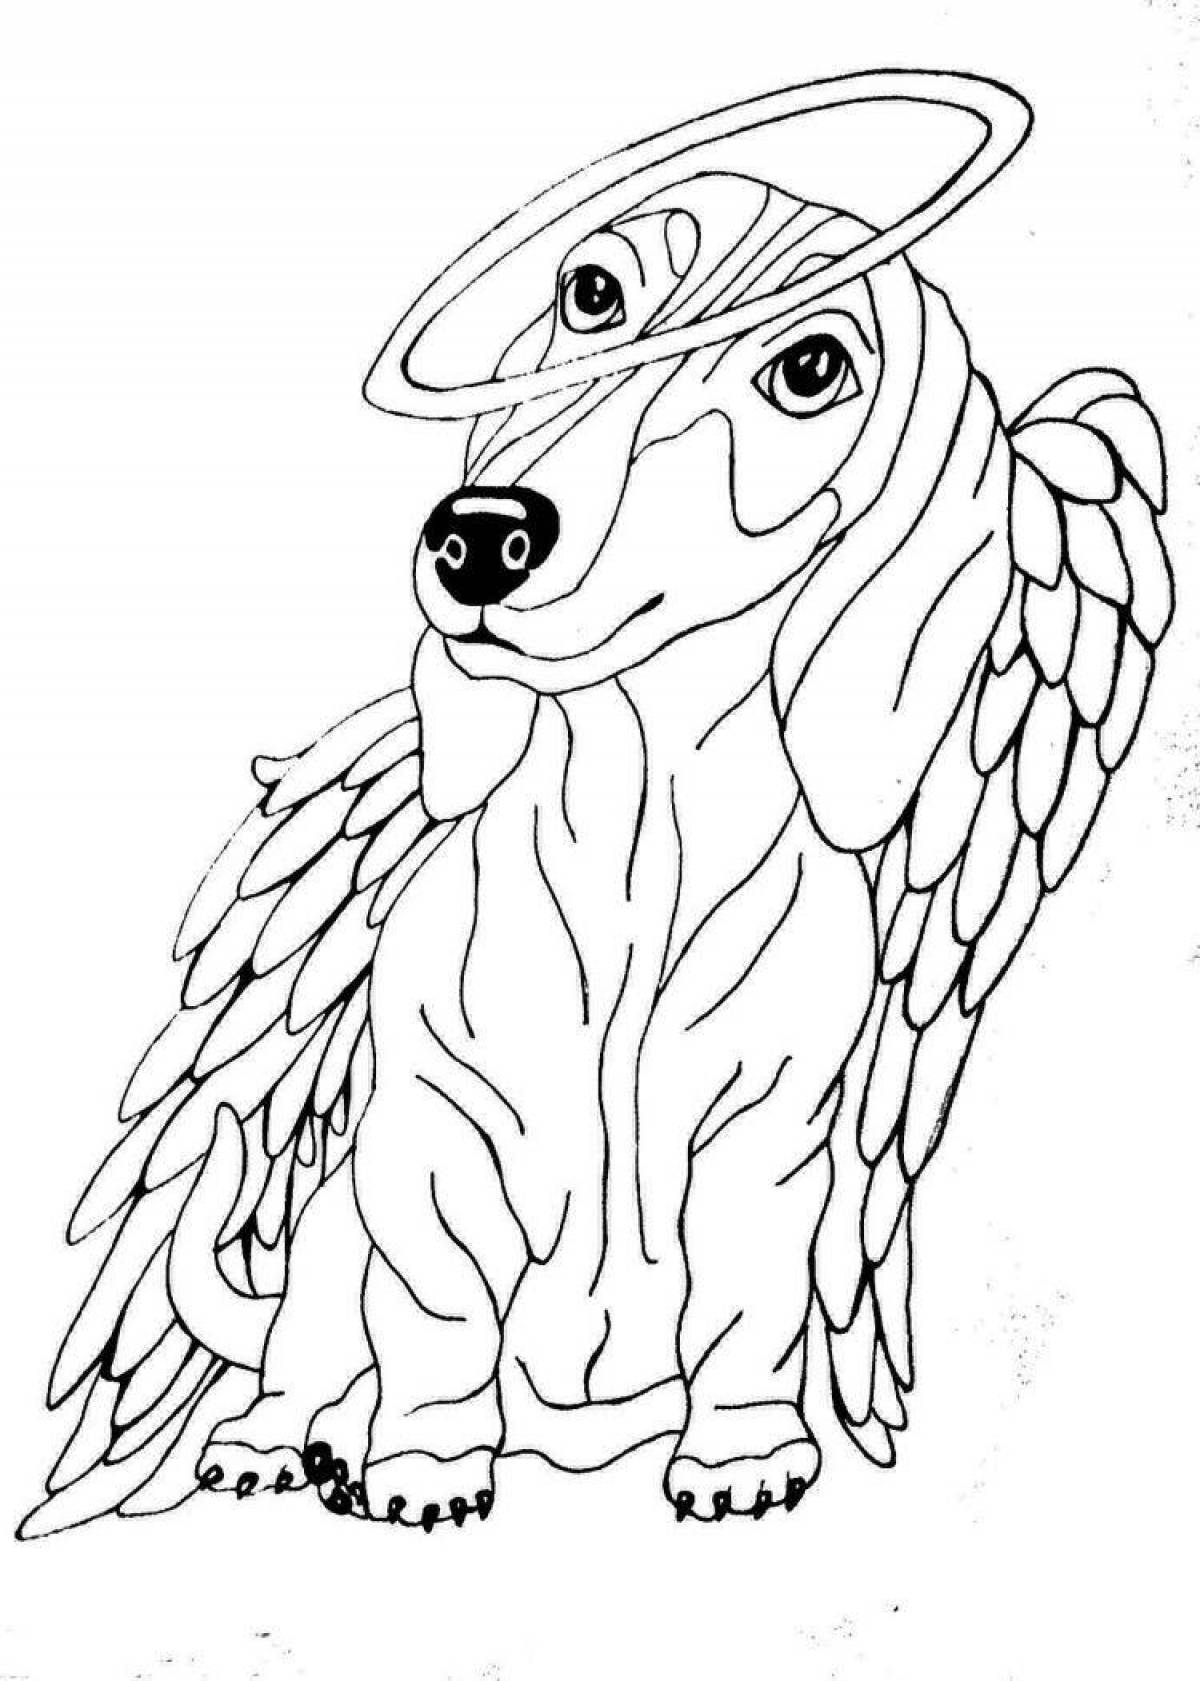 Joyful coloring dog with wings